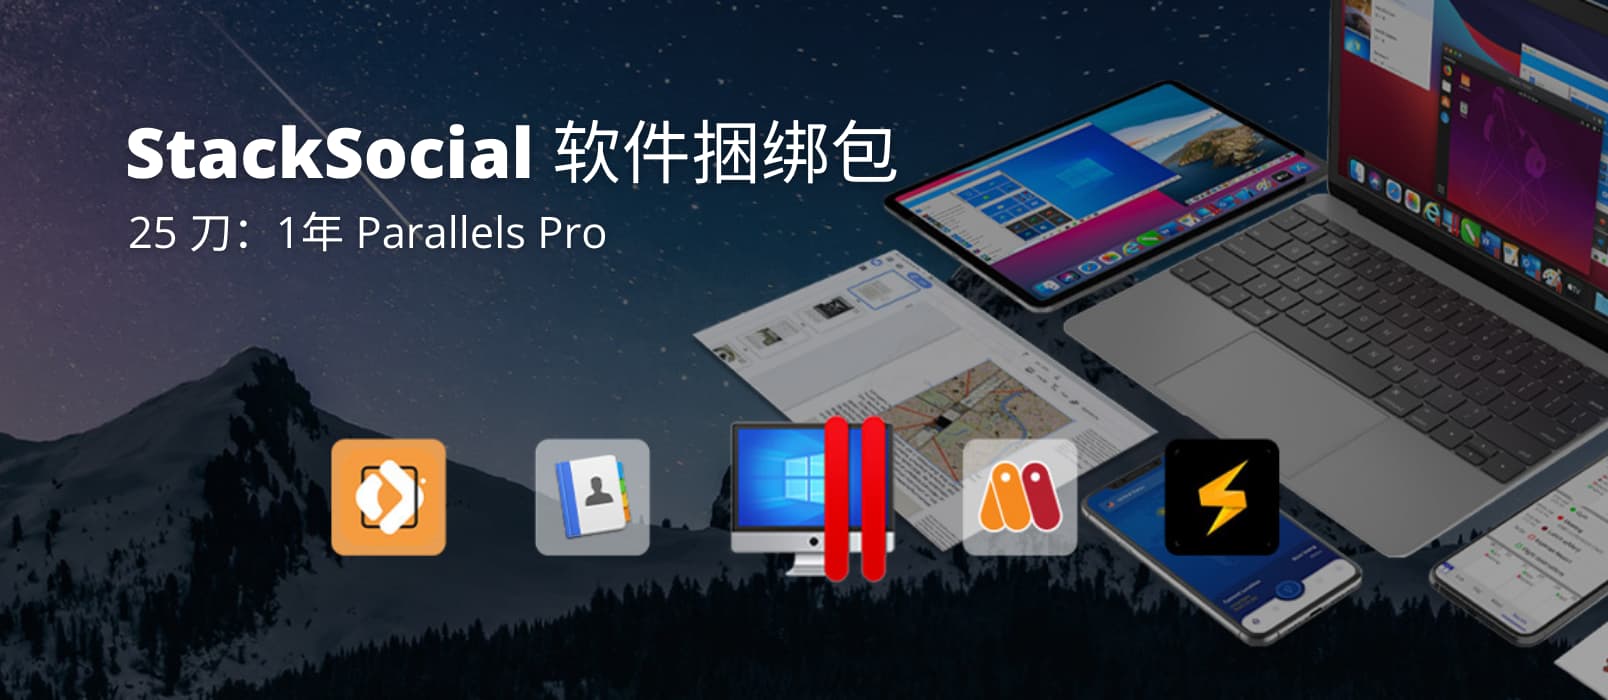 StackSocial 新 Mac 软件捆绑包，包含 Parallels Pro 虚拟机等 5 款软件，只需 25 刀 1